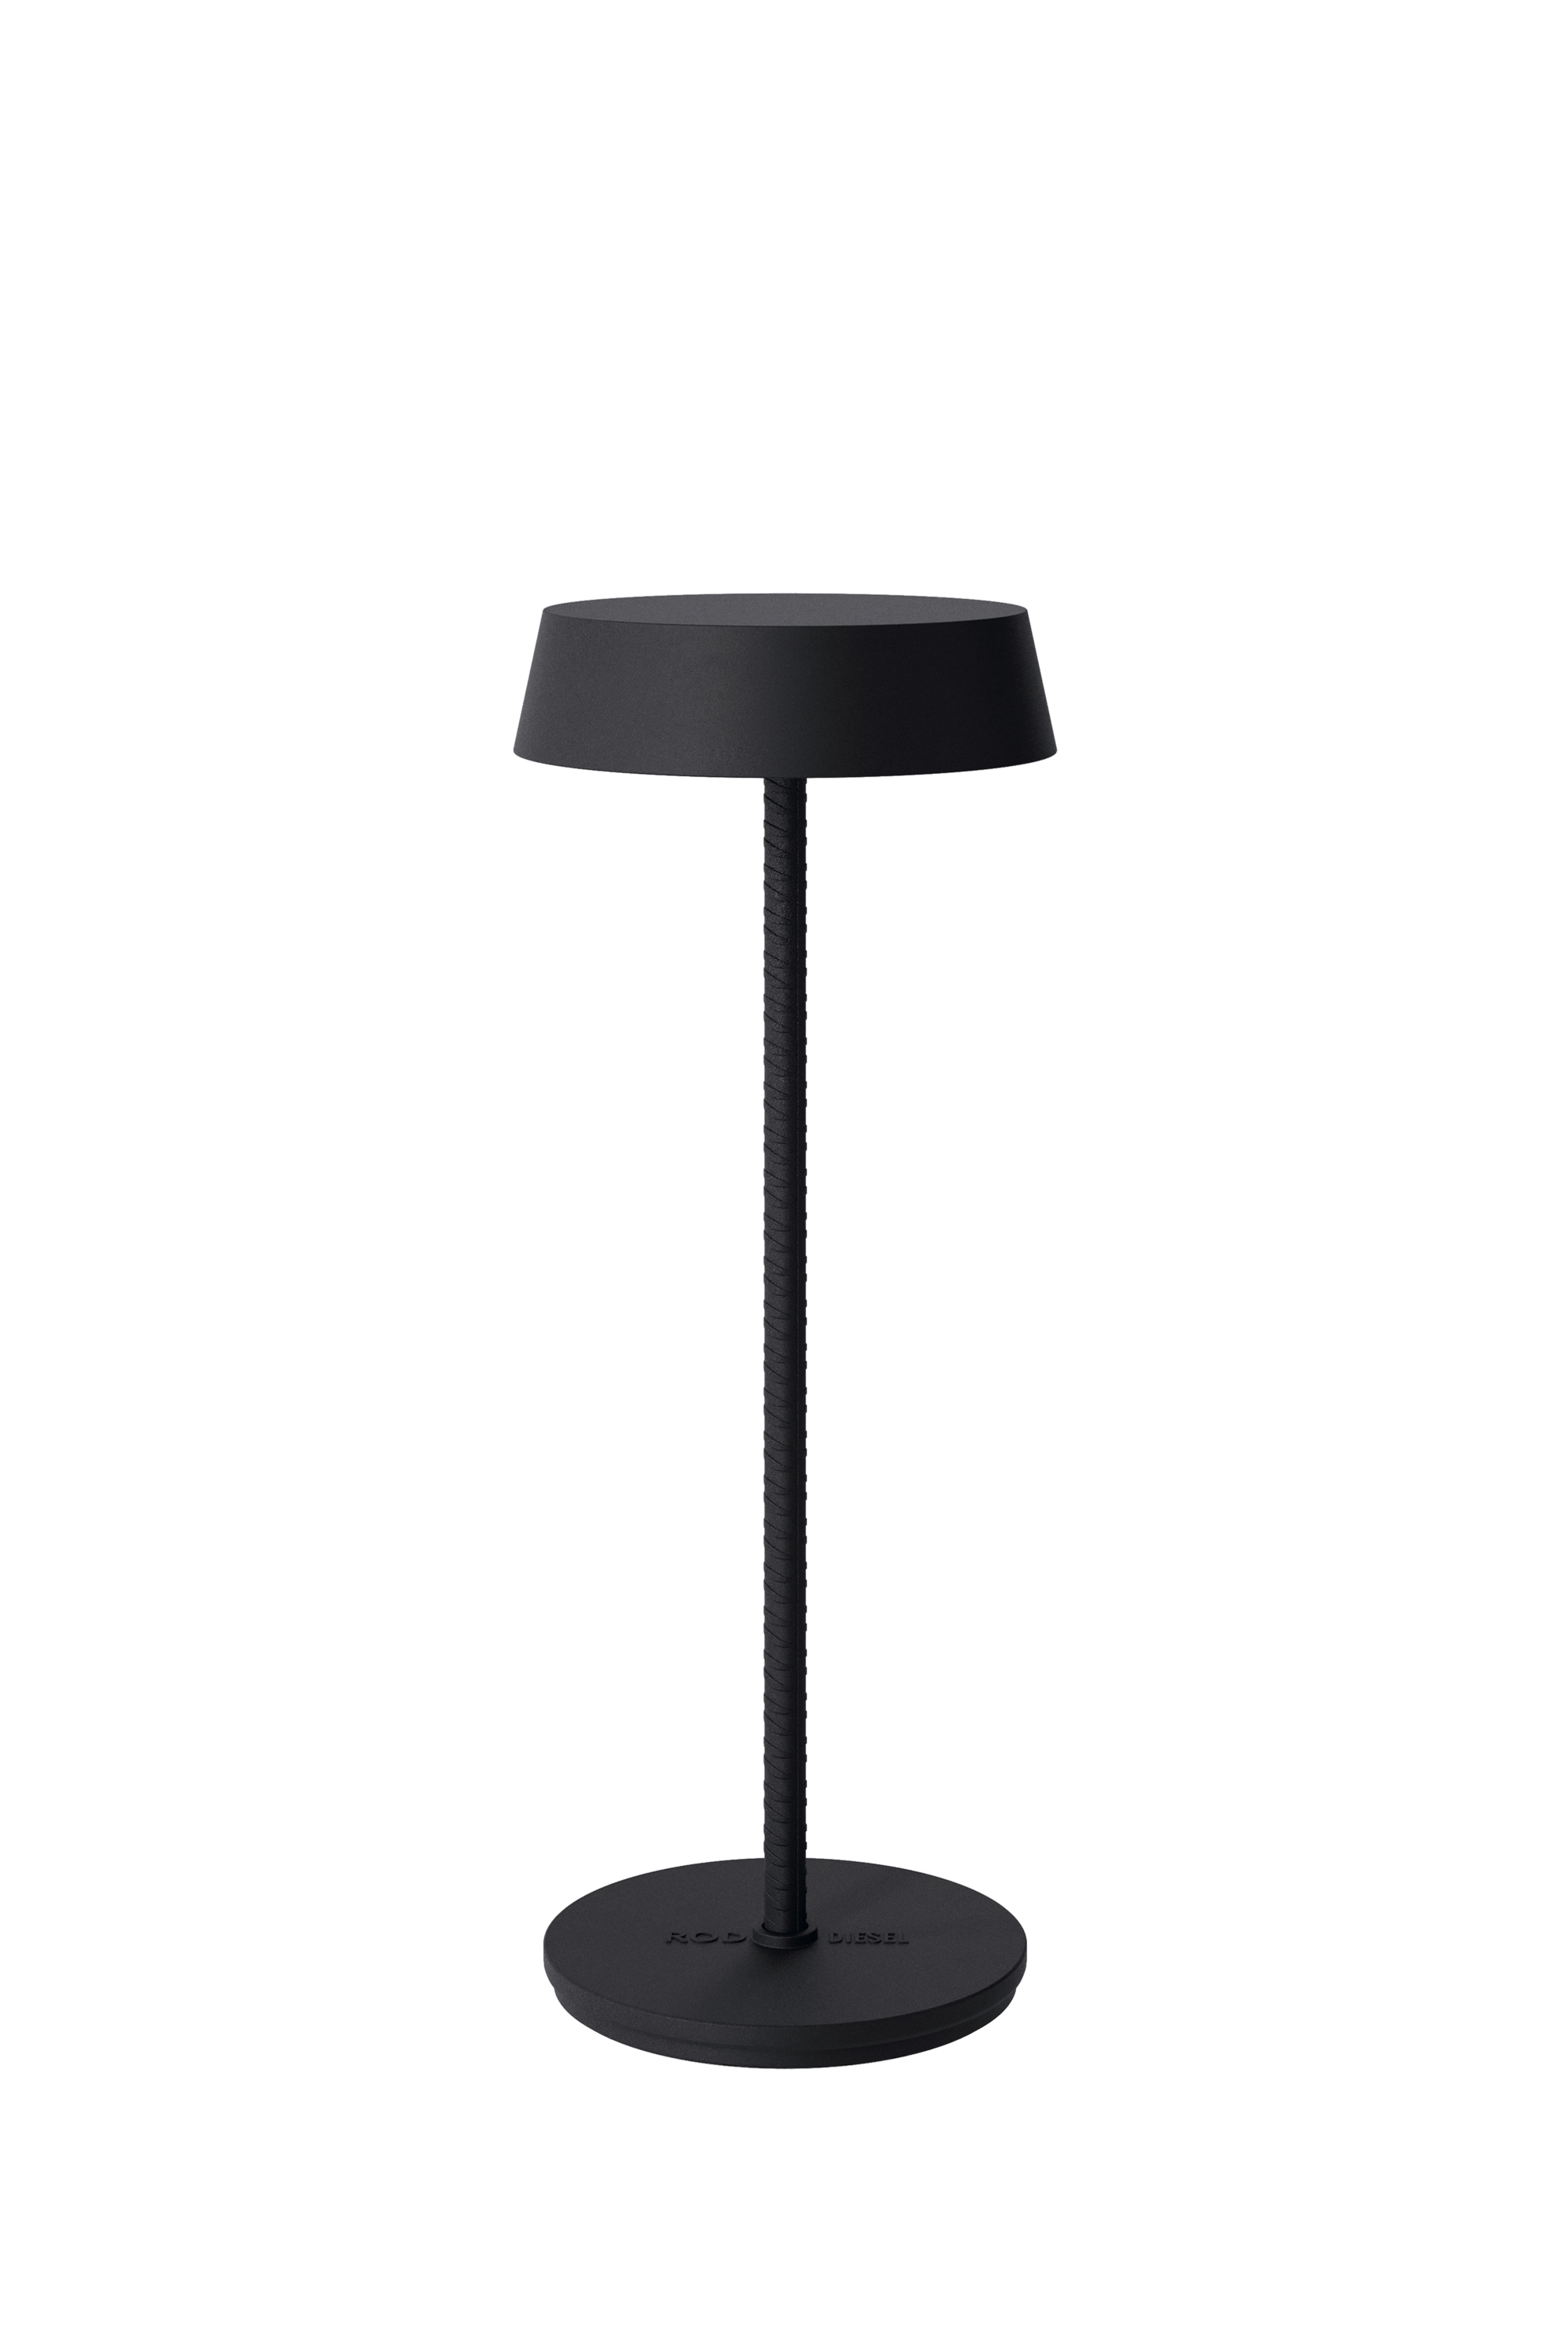 51181 2020 ROD CORDLESS TABLE LAMP DARK, Black - Lighting